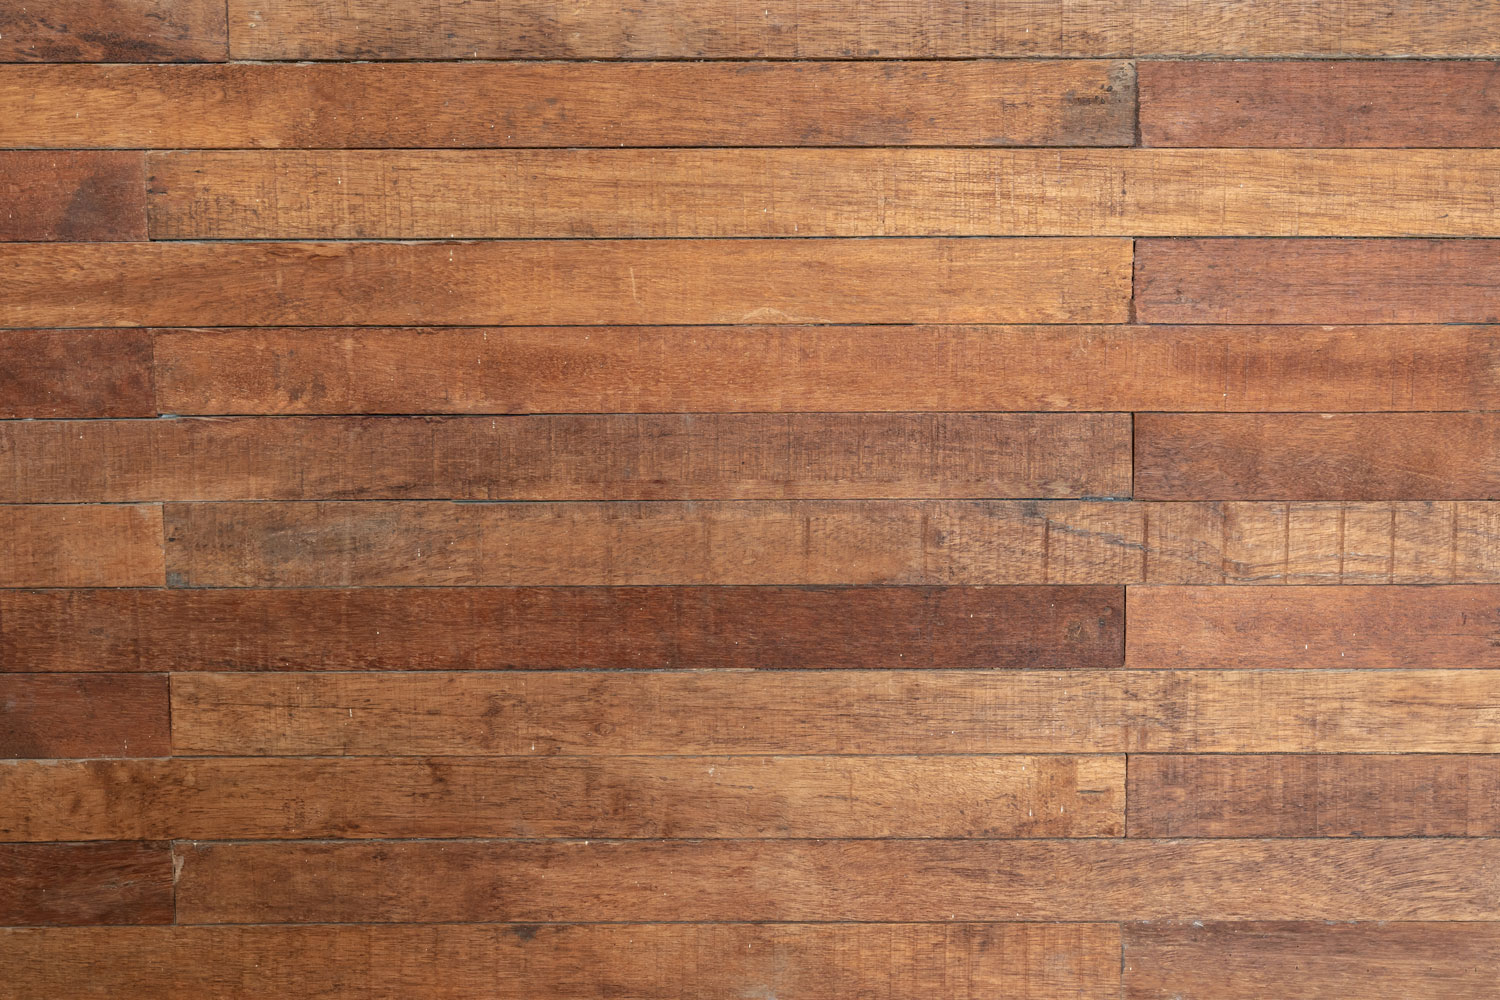 Hardwood patterned flooring in a living room